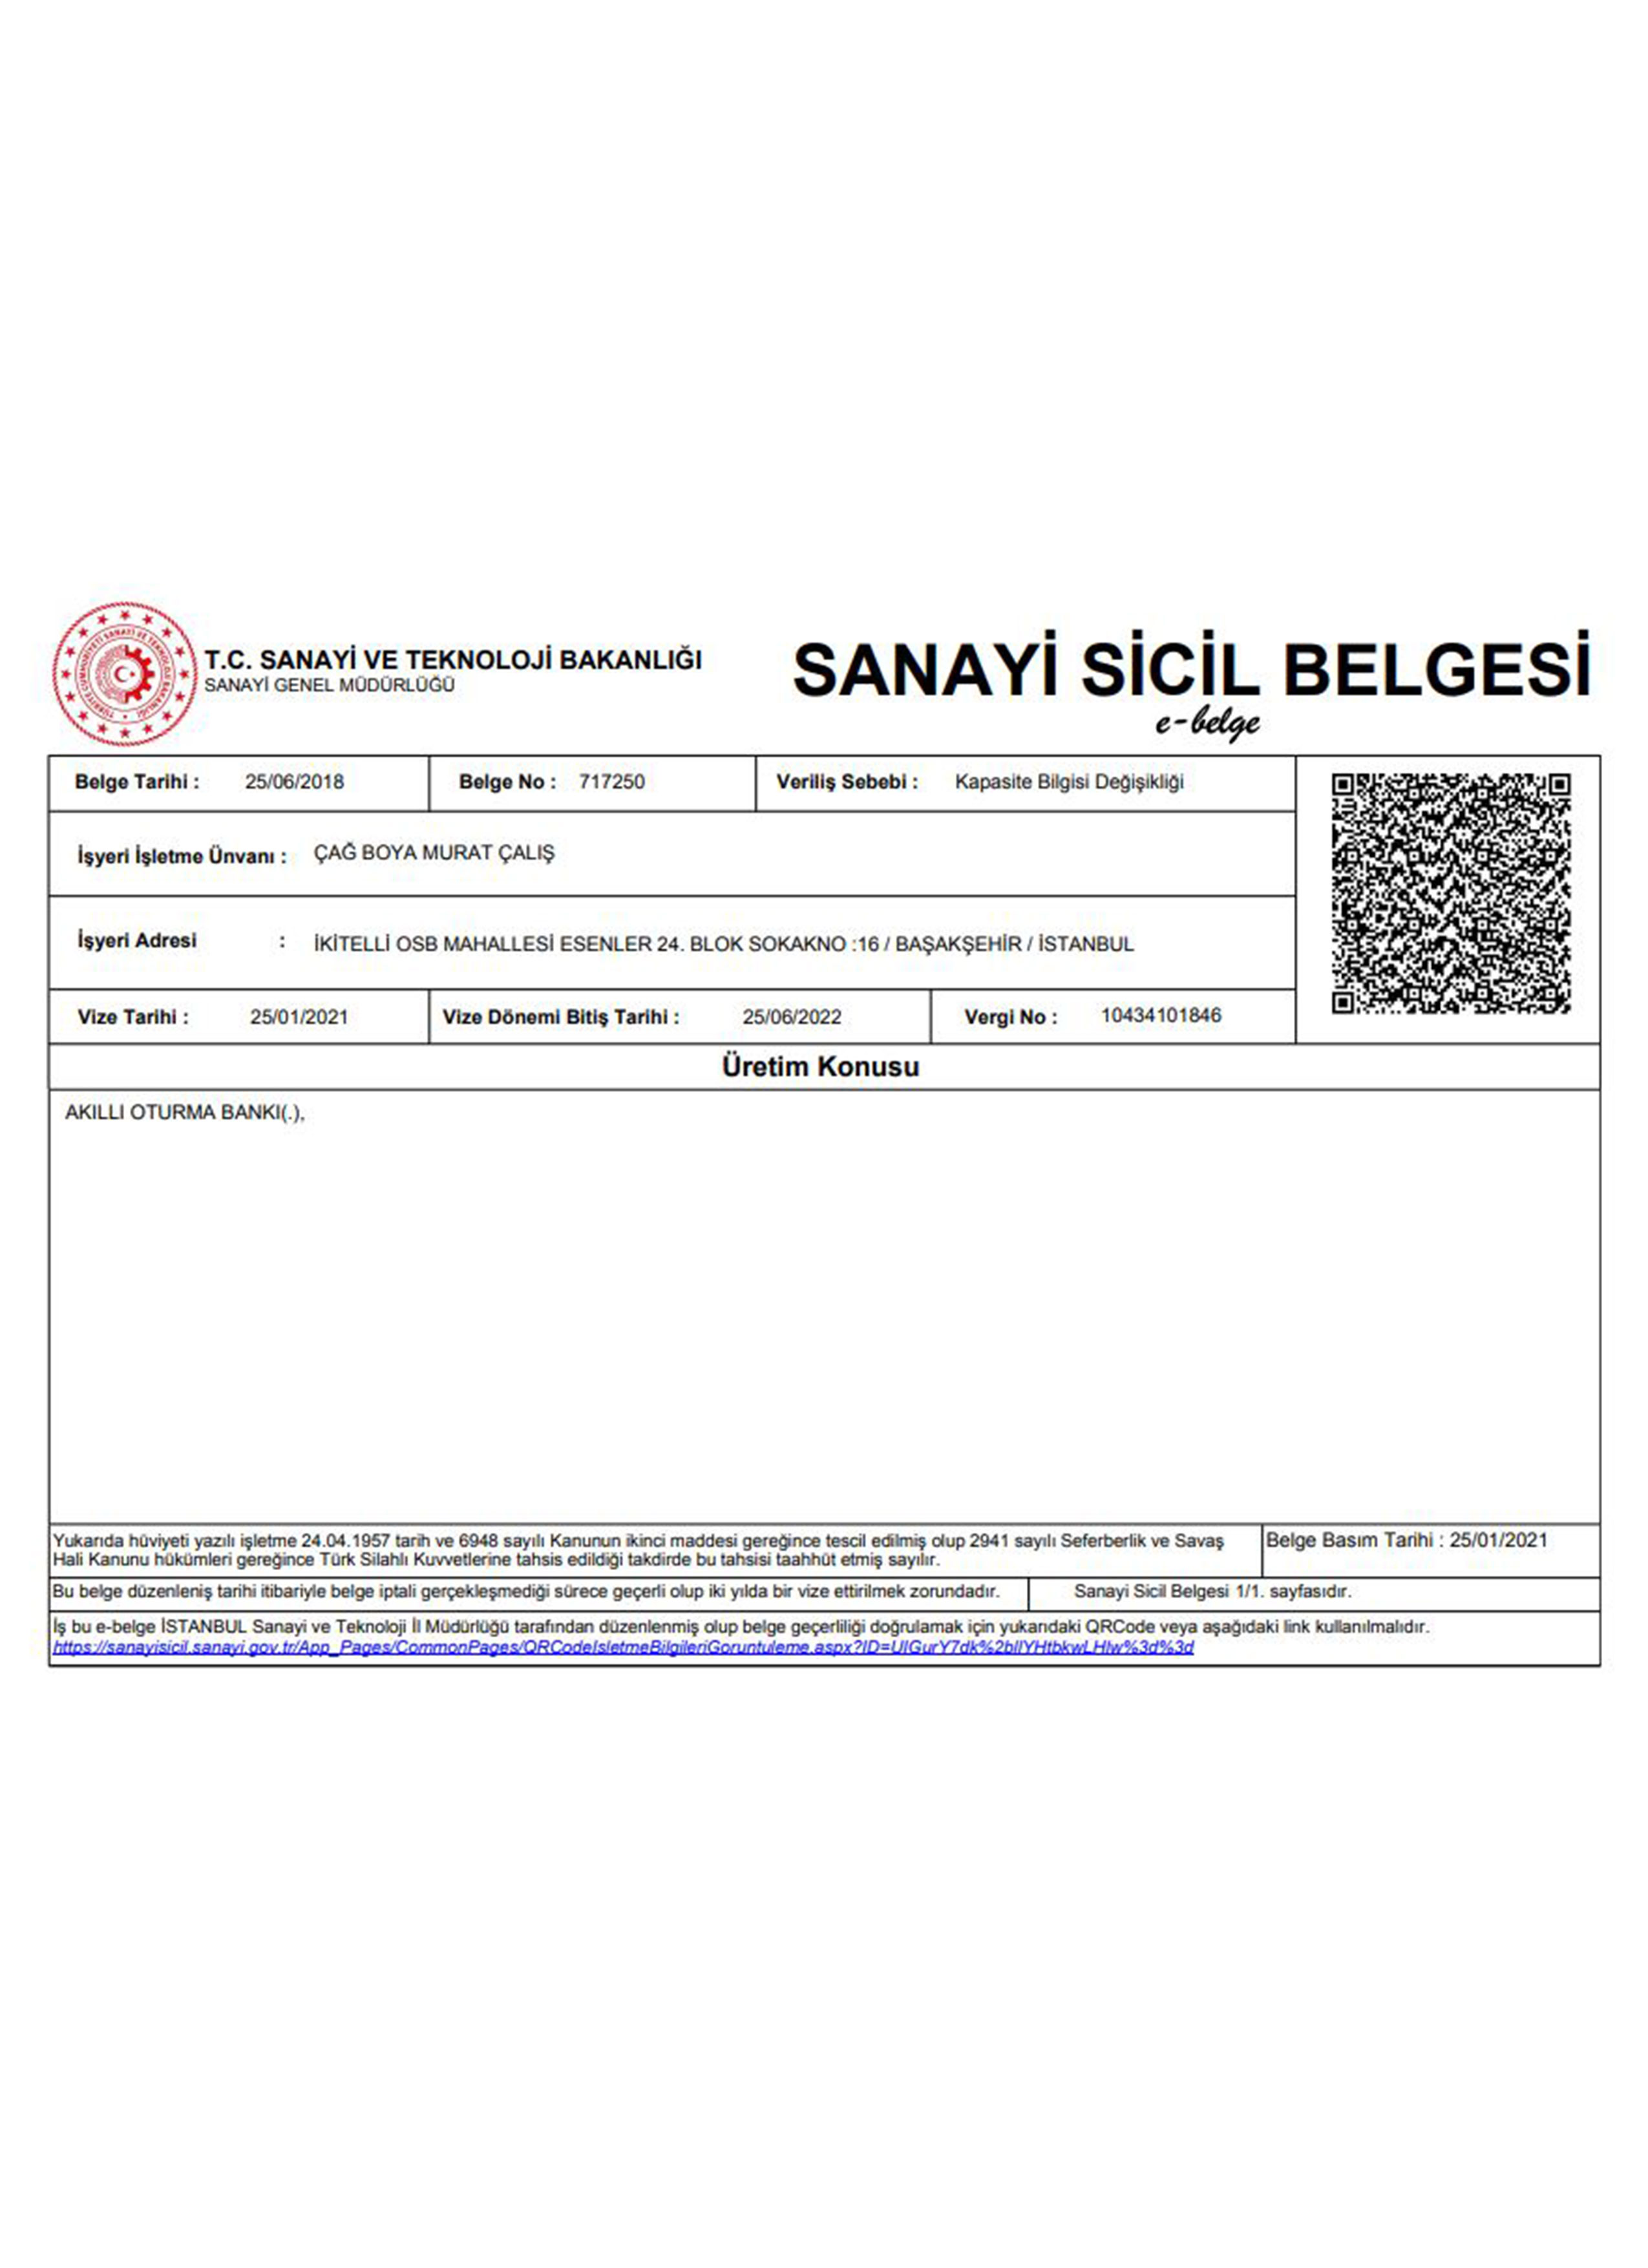 Industry Registration Certificate